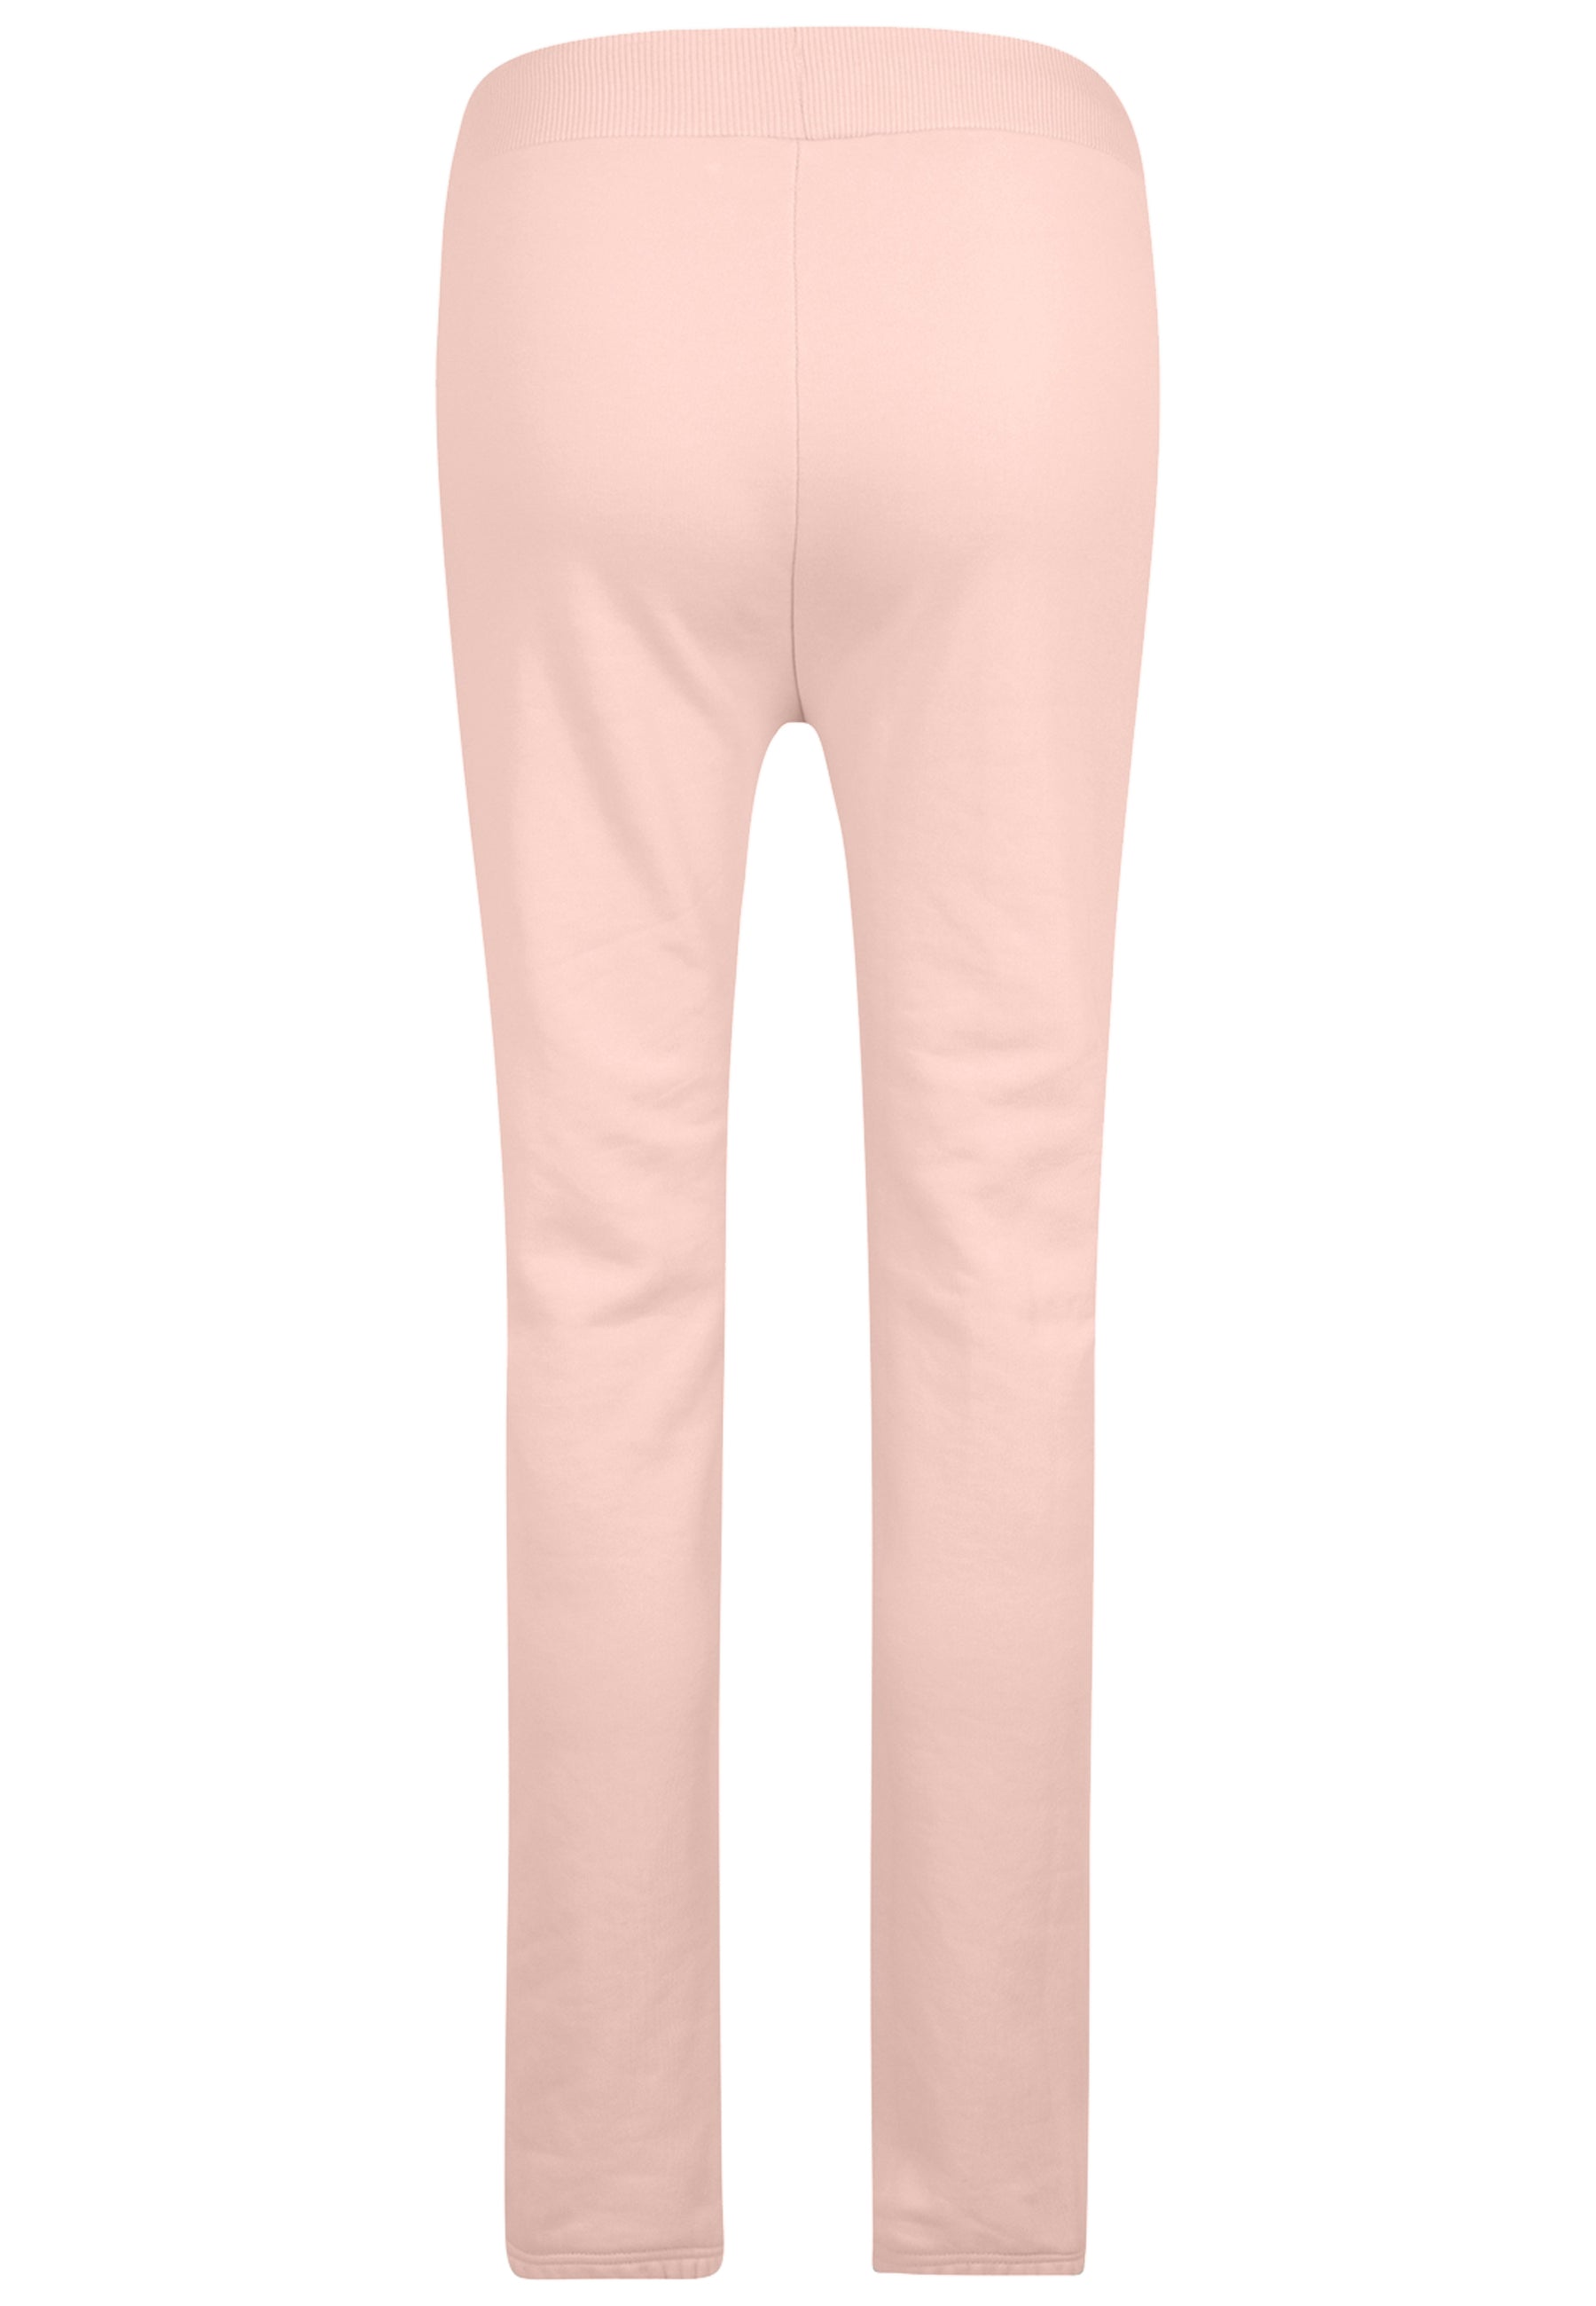 Avellino Jogger Pants in Cloud Pink Hosen Tamaris   